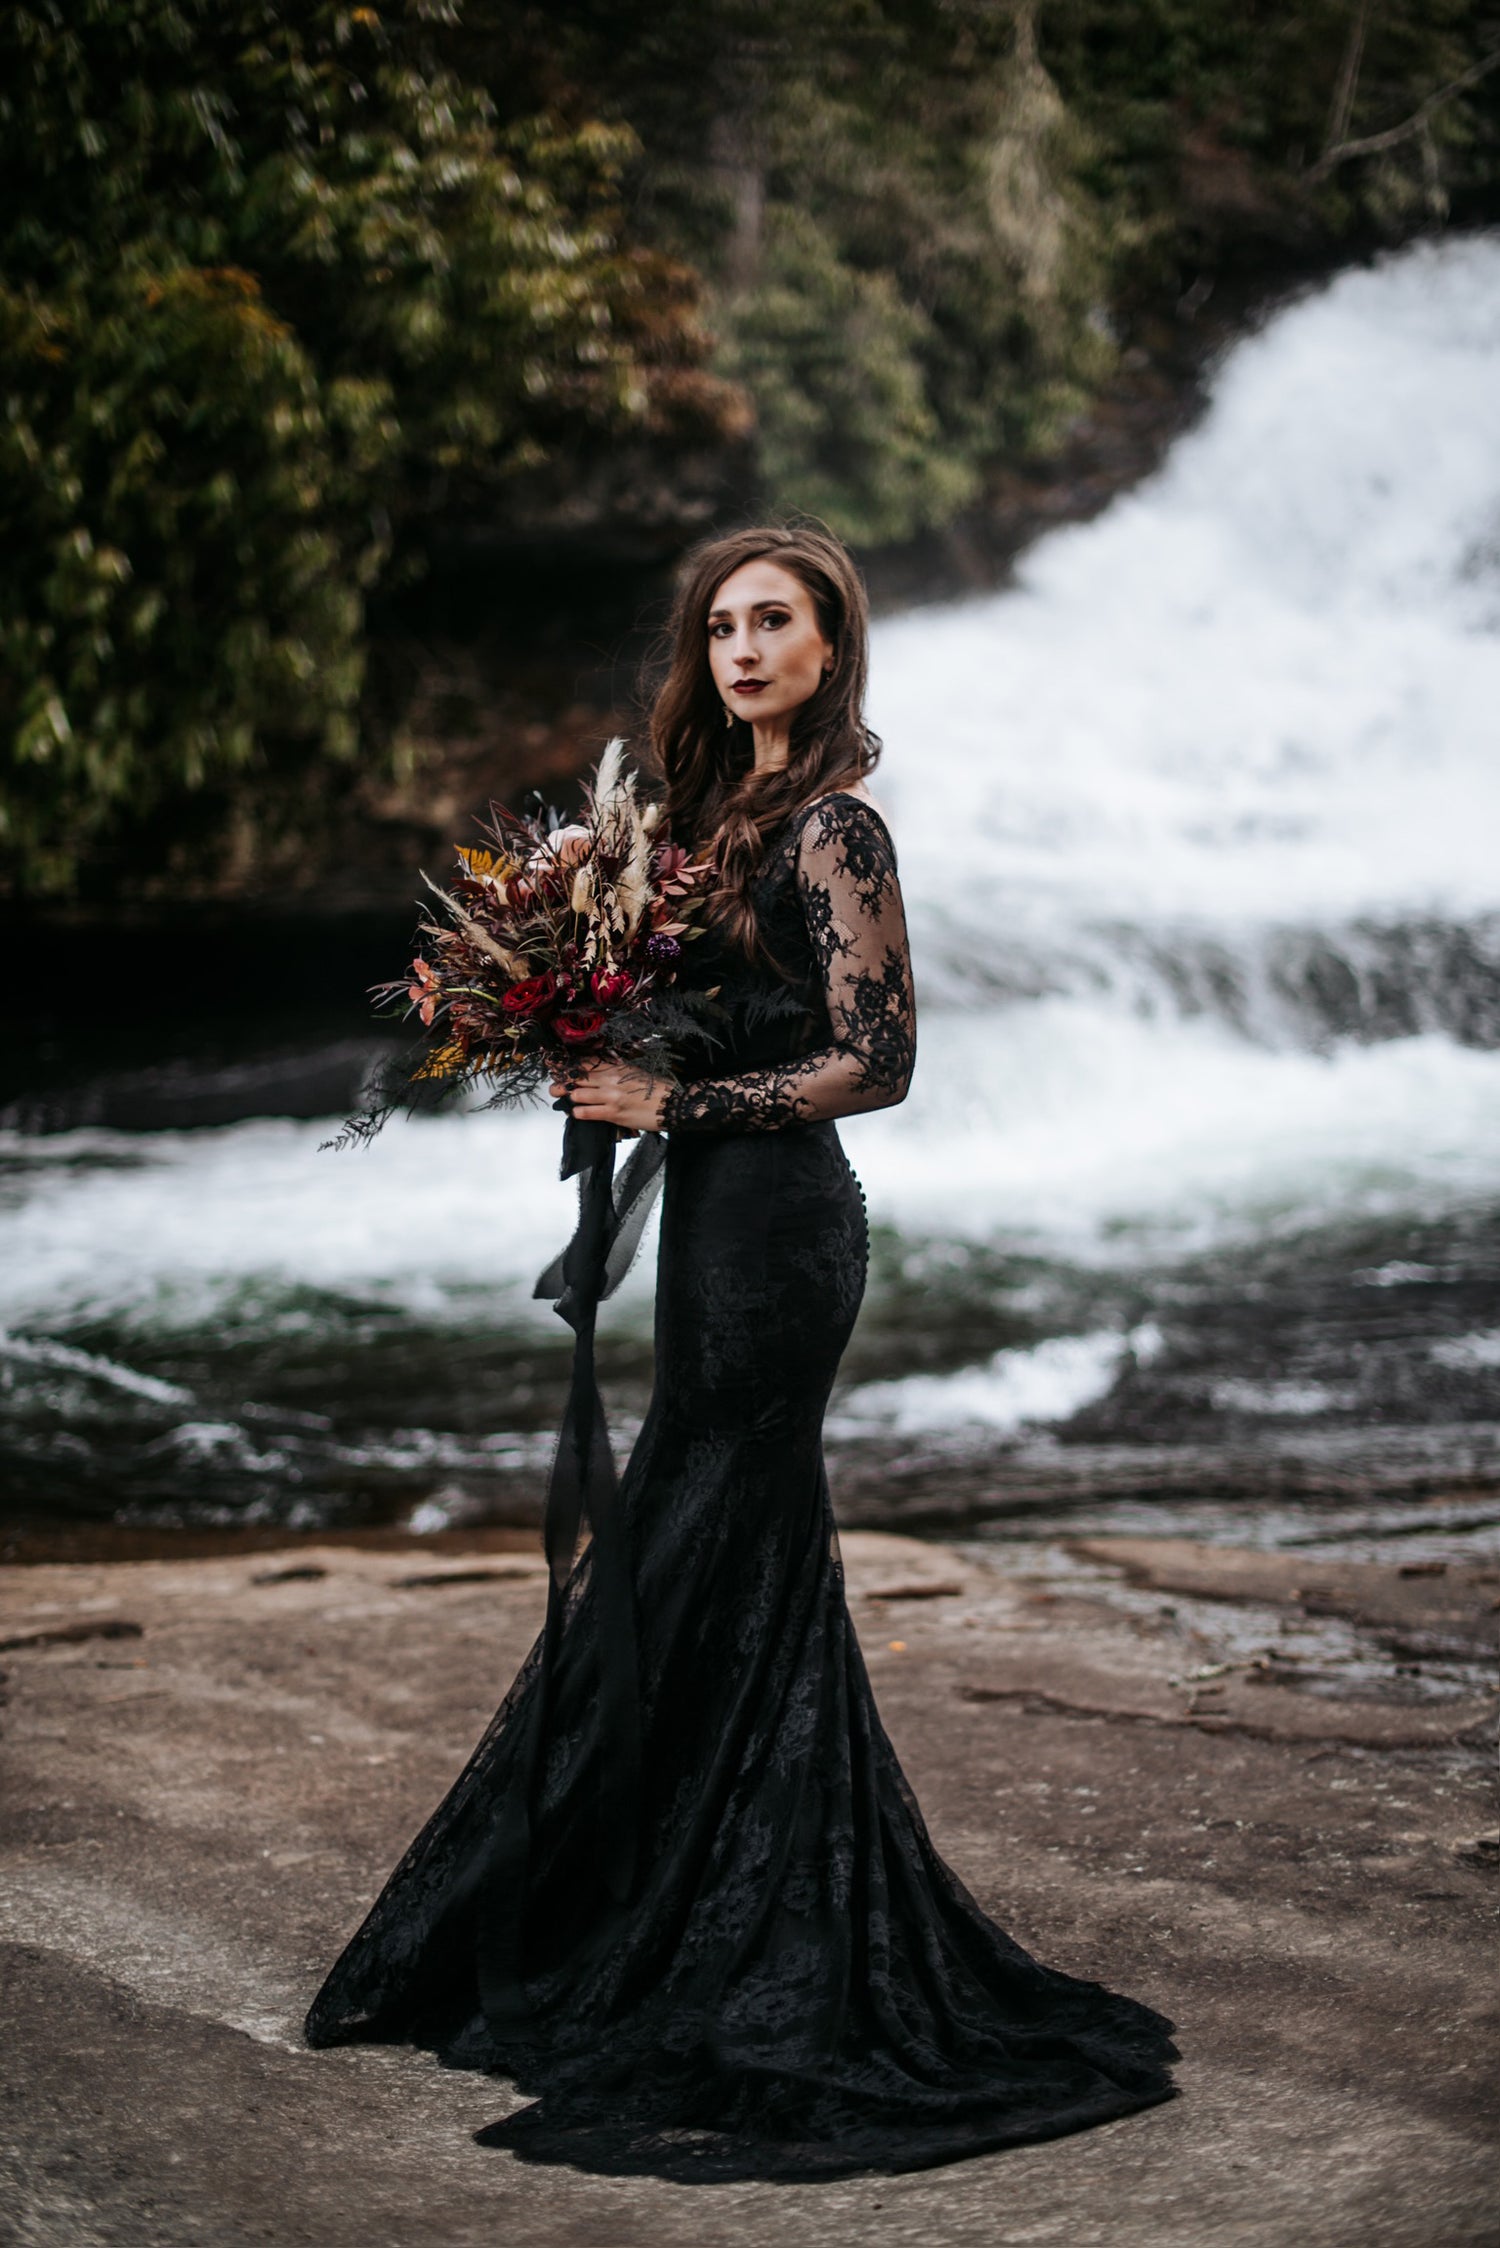 Polina Ivanova Atelier | Verona in Chantilly lace | Black Wedding Dress,  Black Lace Wedding Dresses, Alternative Wedding Dress, Gothic Wedding Dress  – polinaivanova.atelier